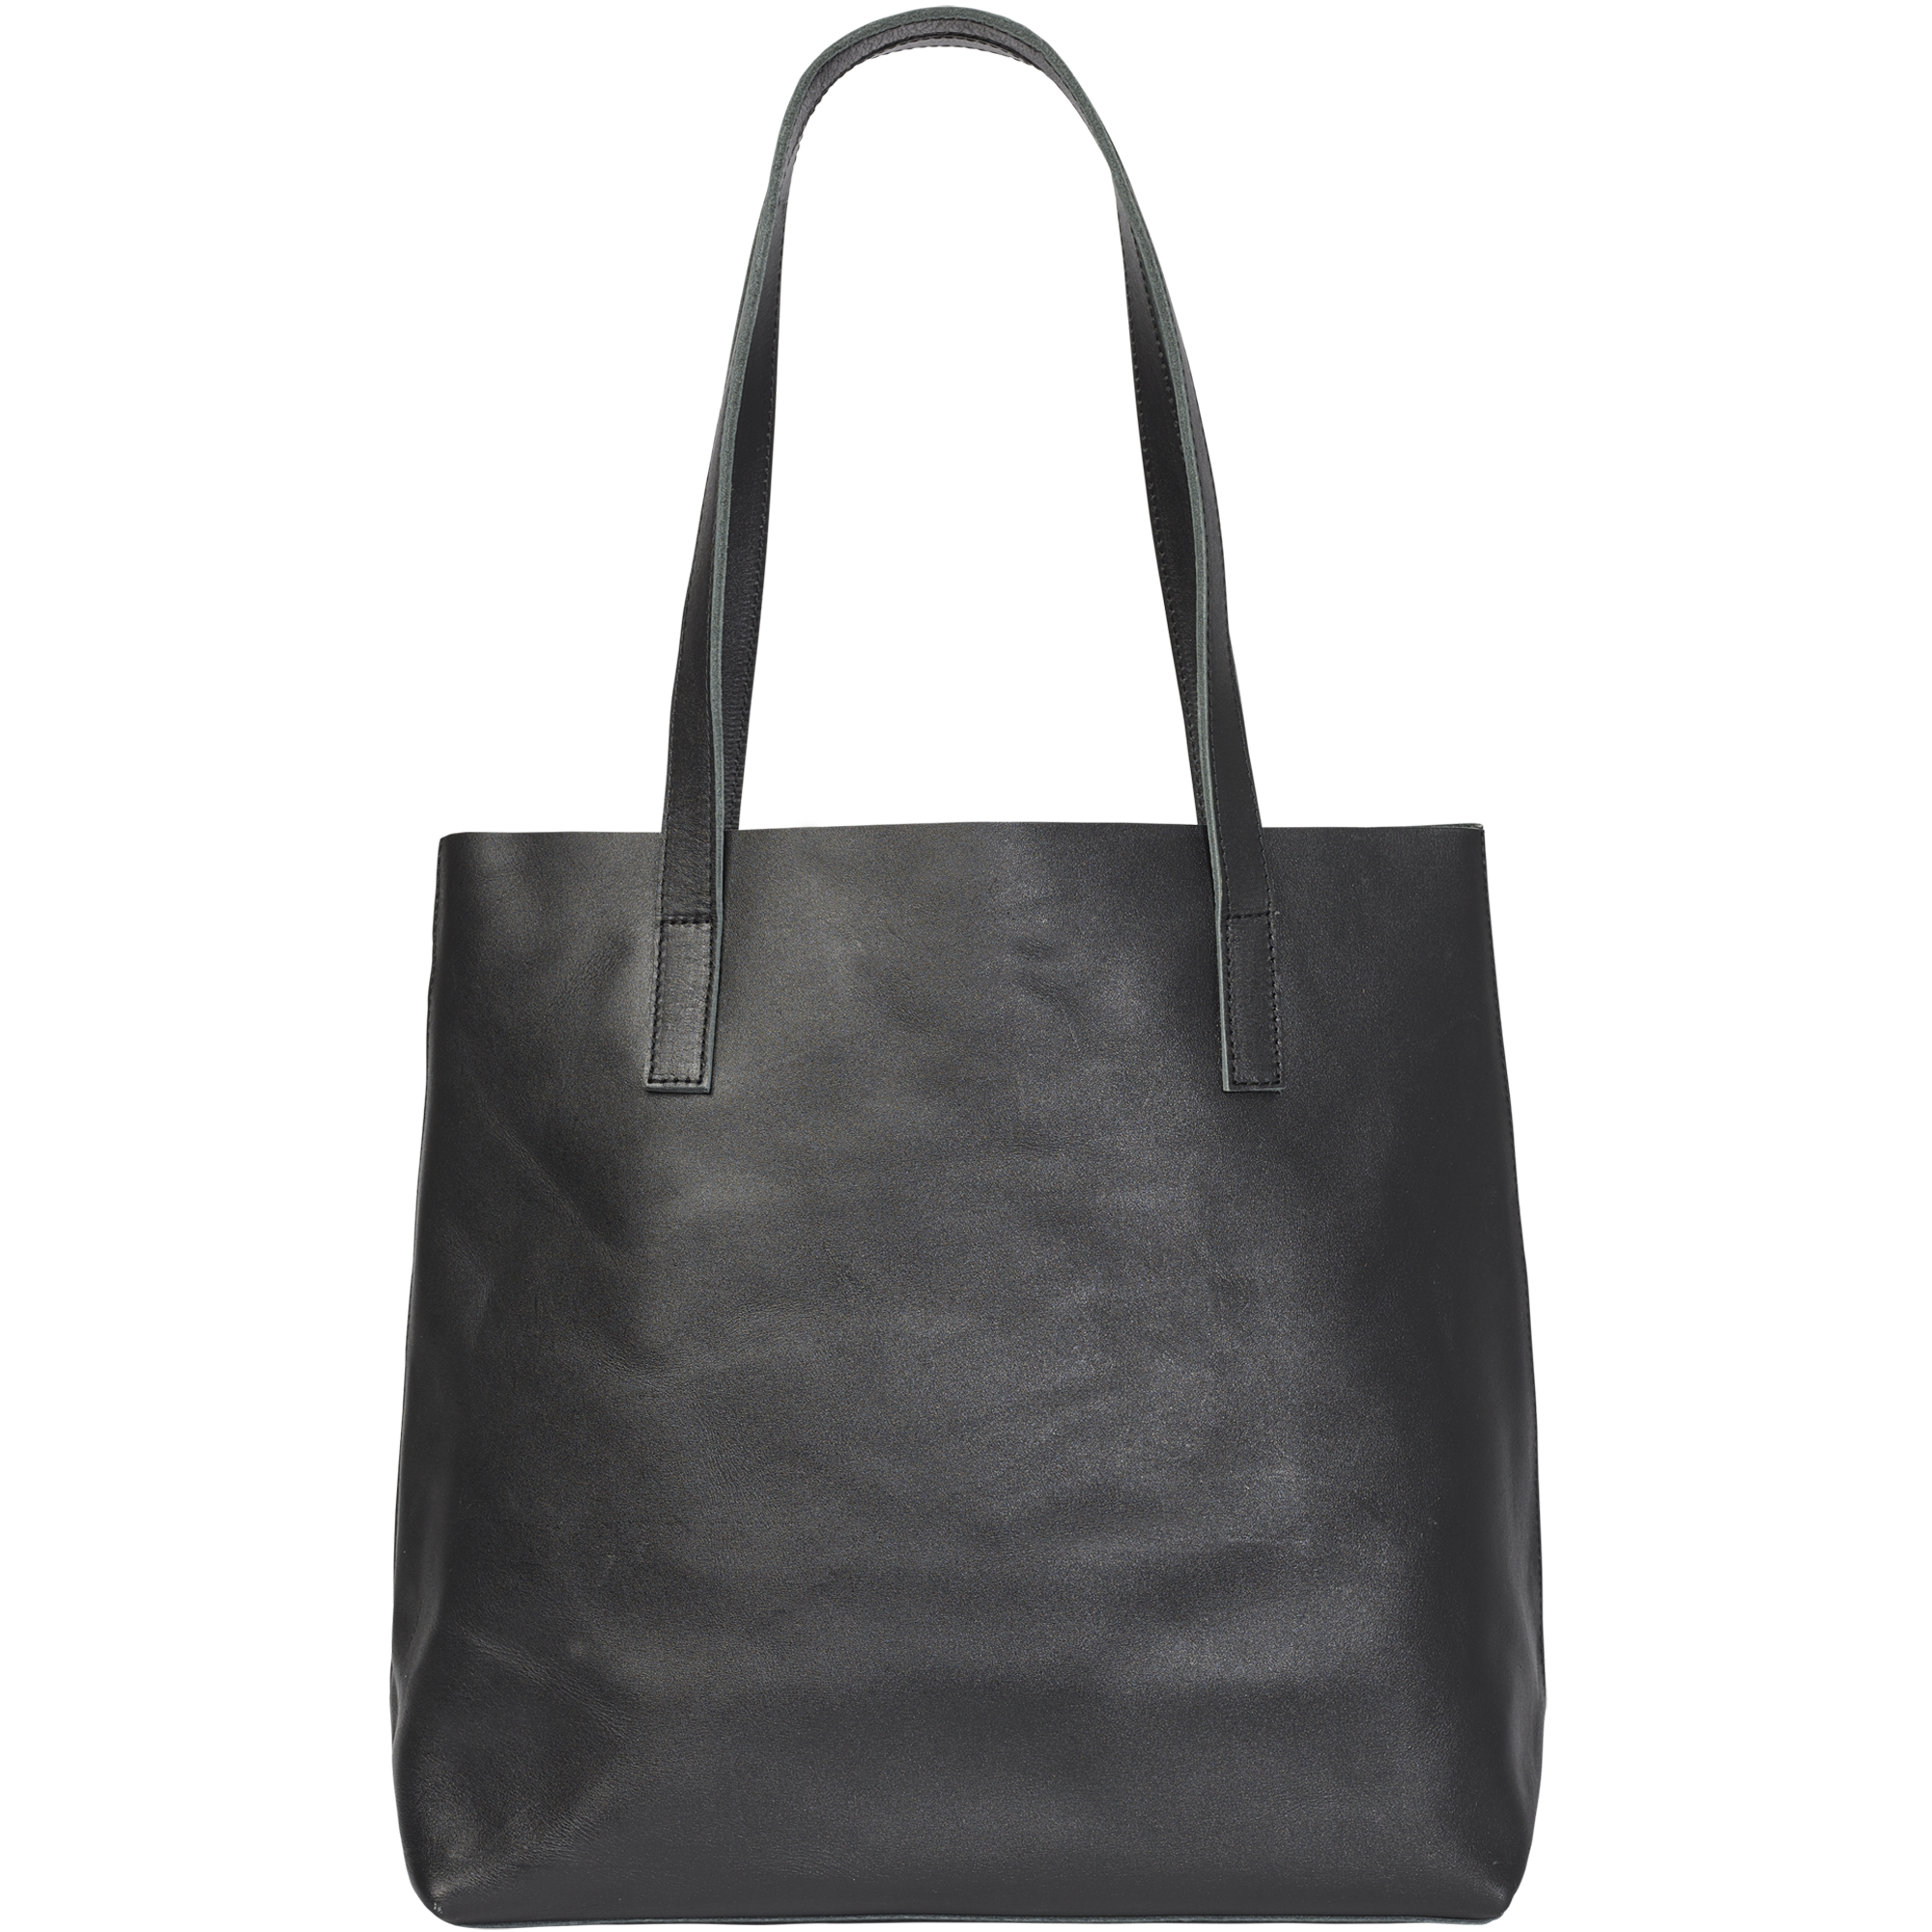 Handbag Black Tote Bag